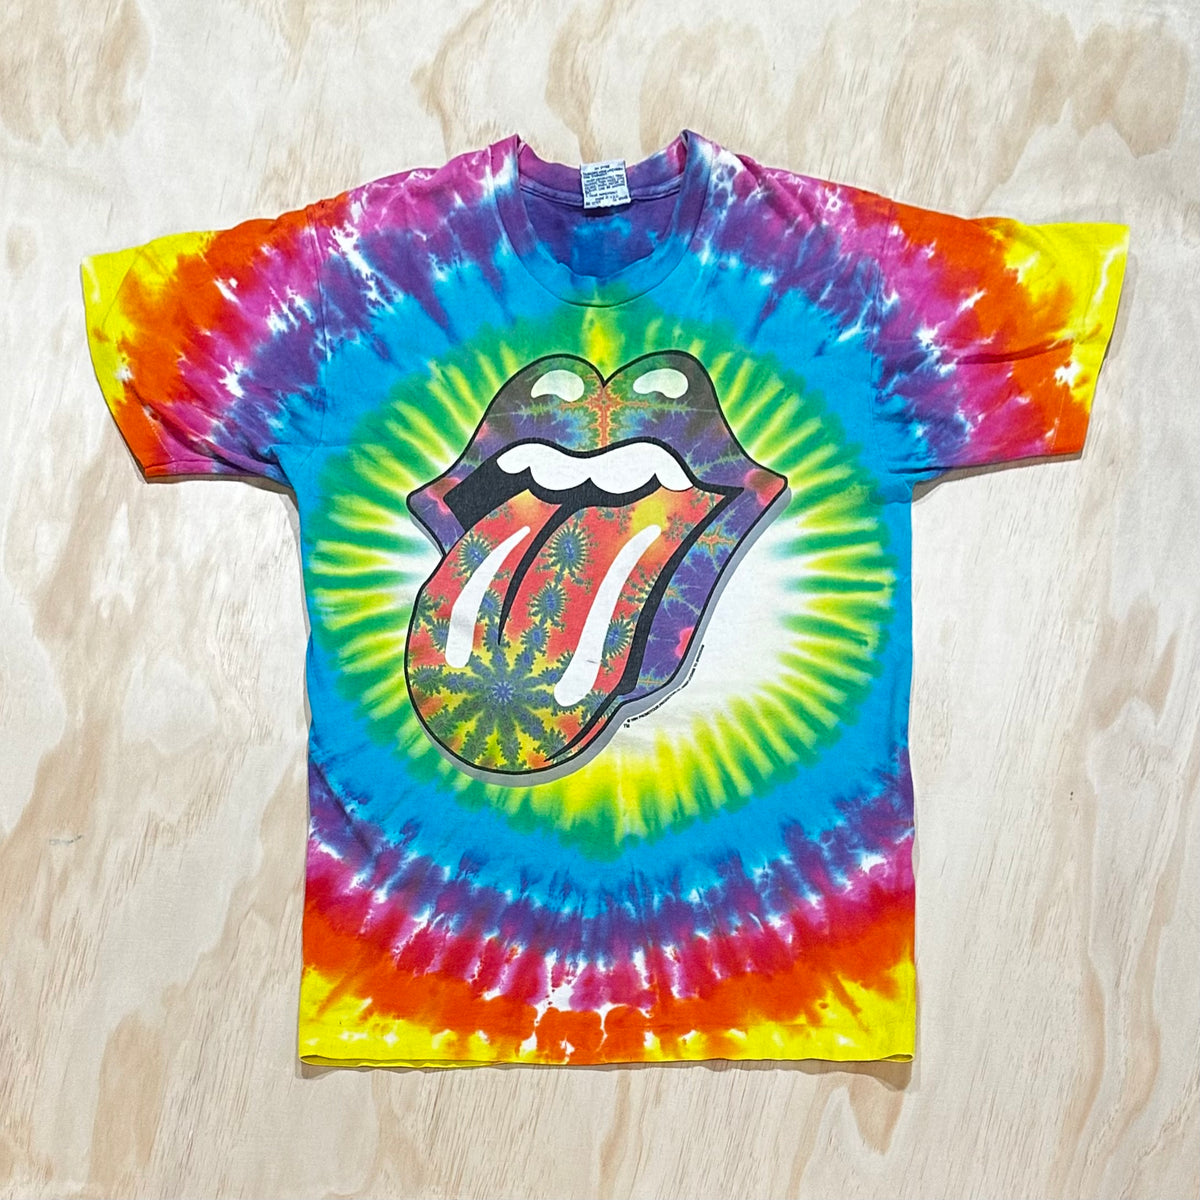 Vintage 1994 The Rolling Stones Tie Dye Liquid Blue T-Shirt